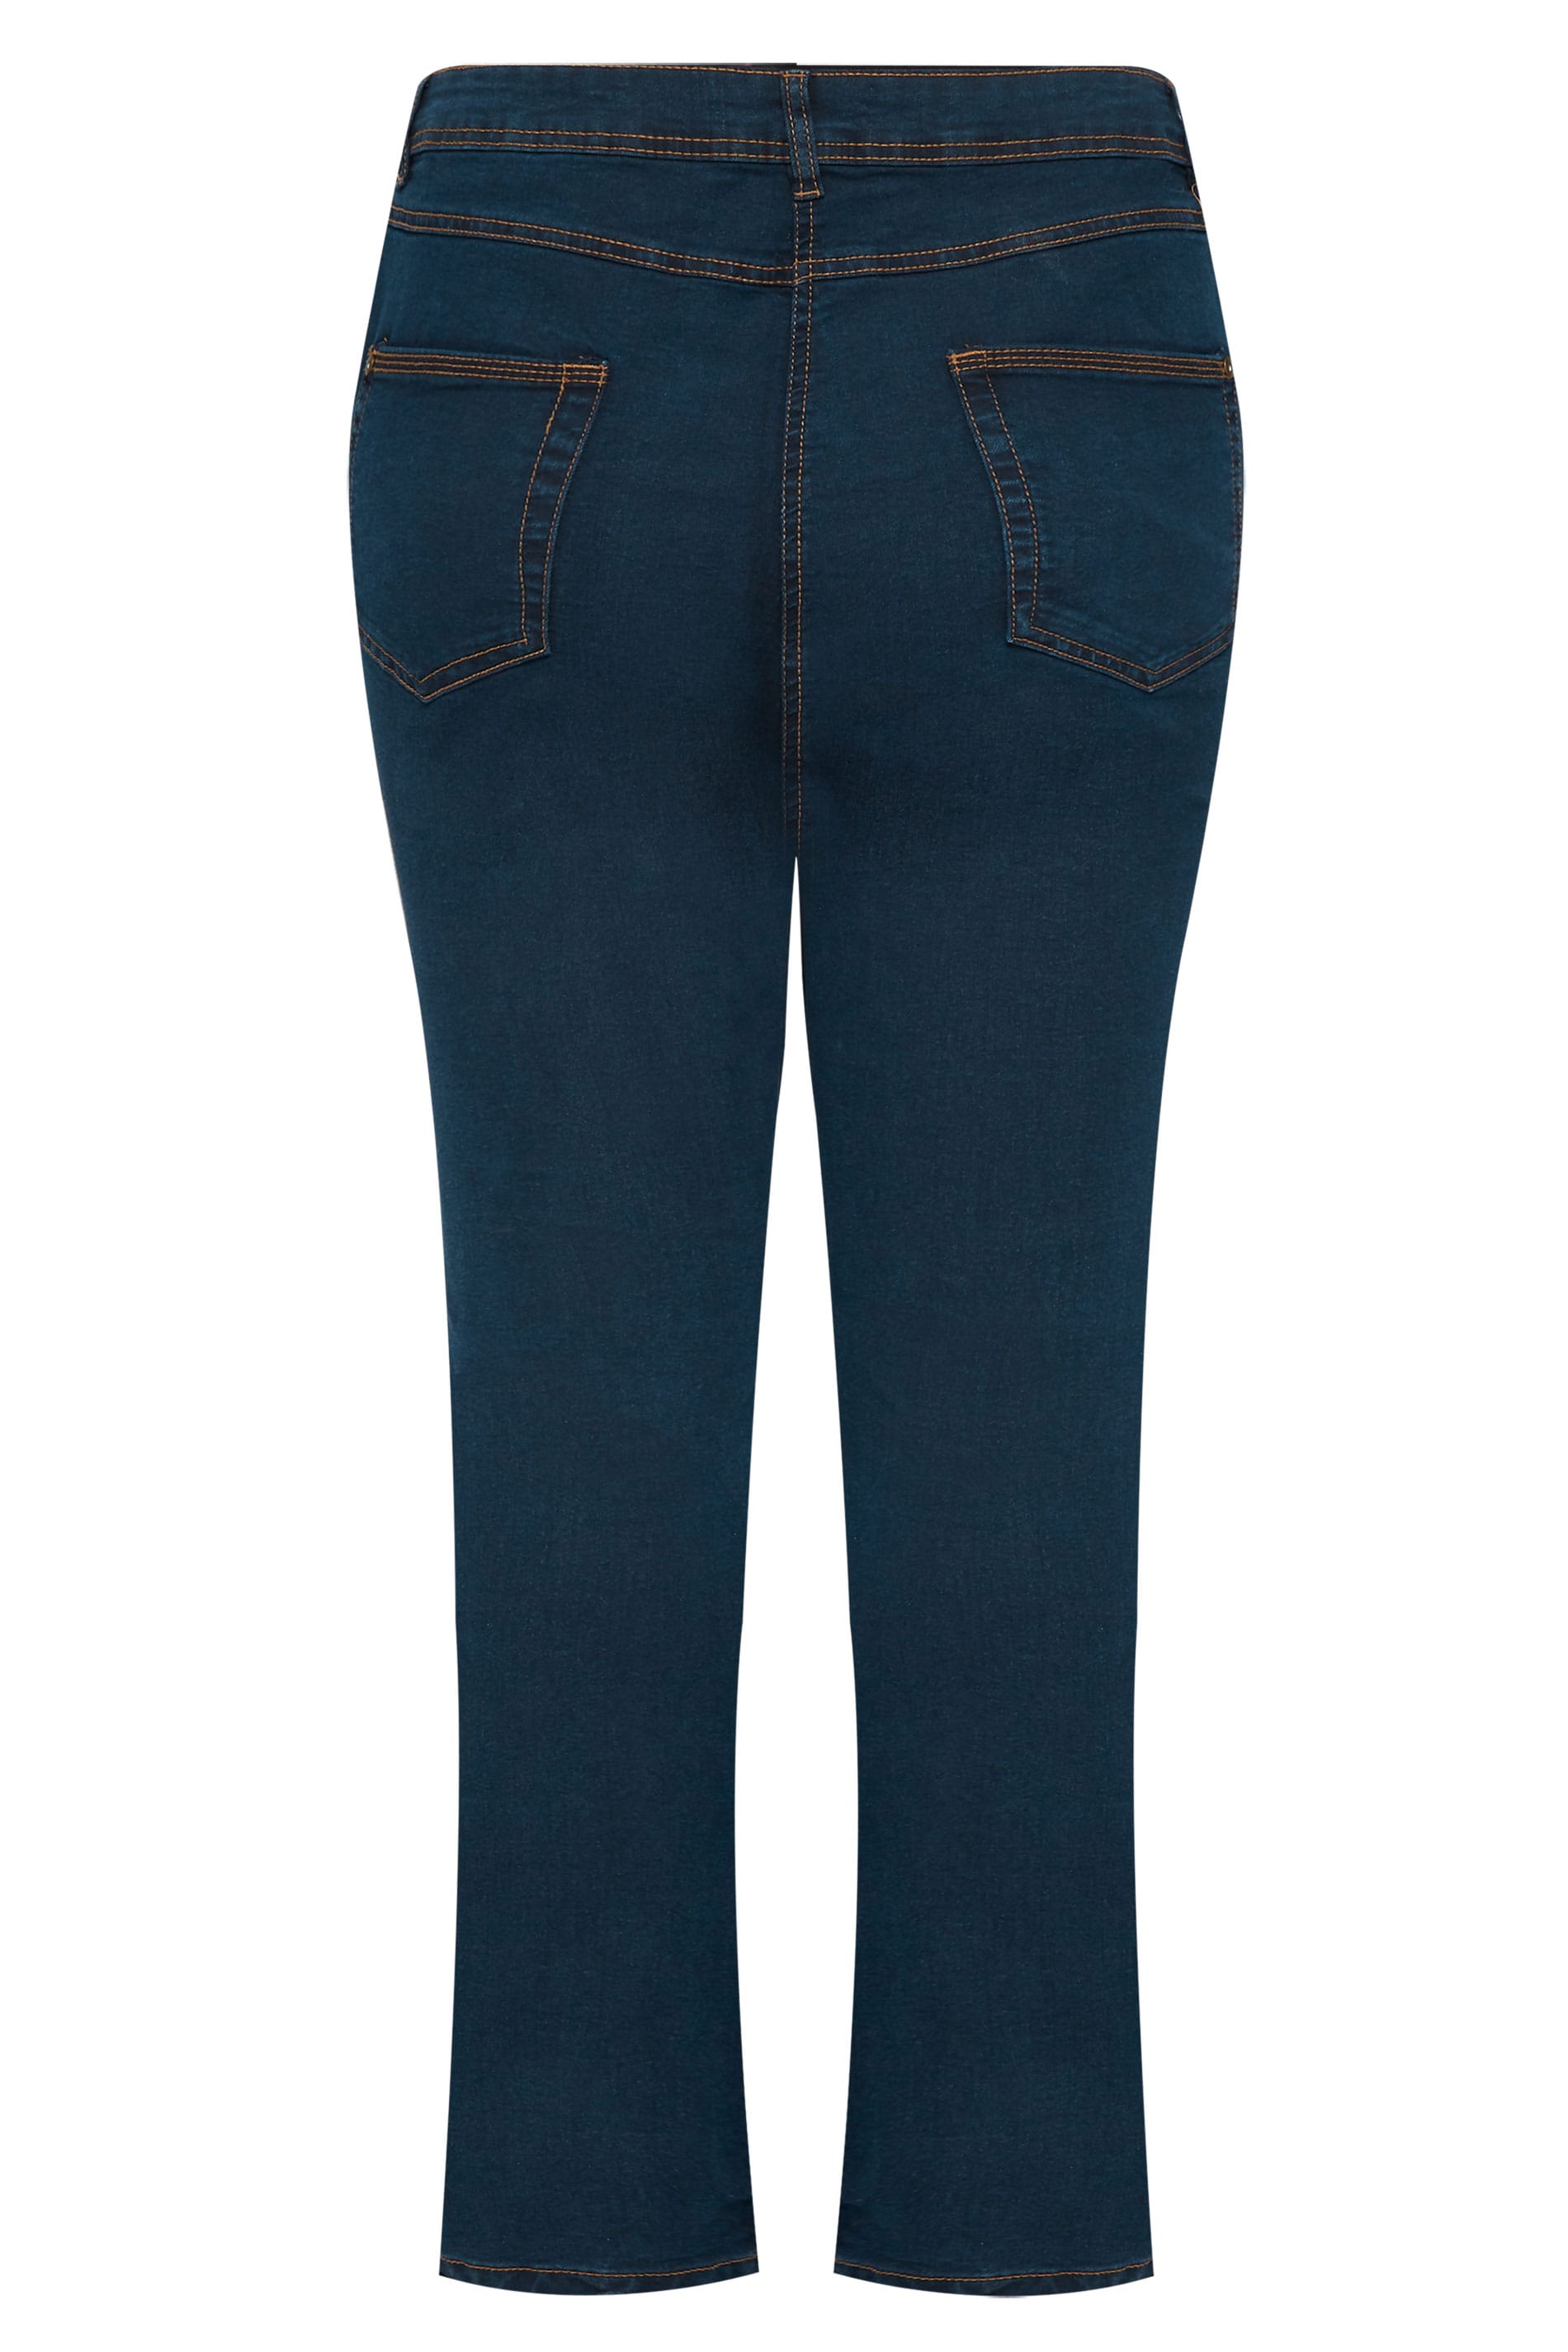 Indigo Bootcut 5 Pocket Denim Jeans Plus Size 14 to 32